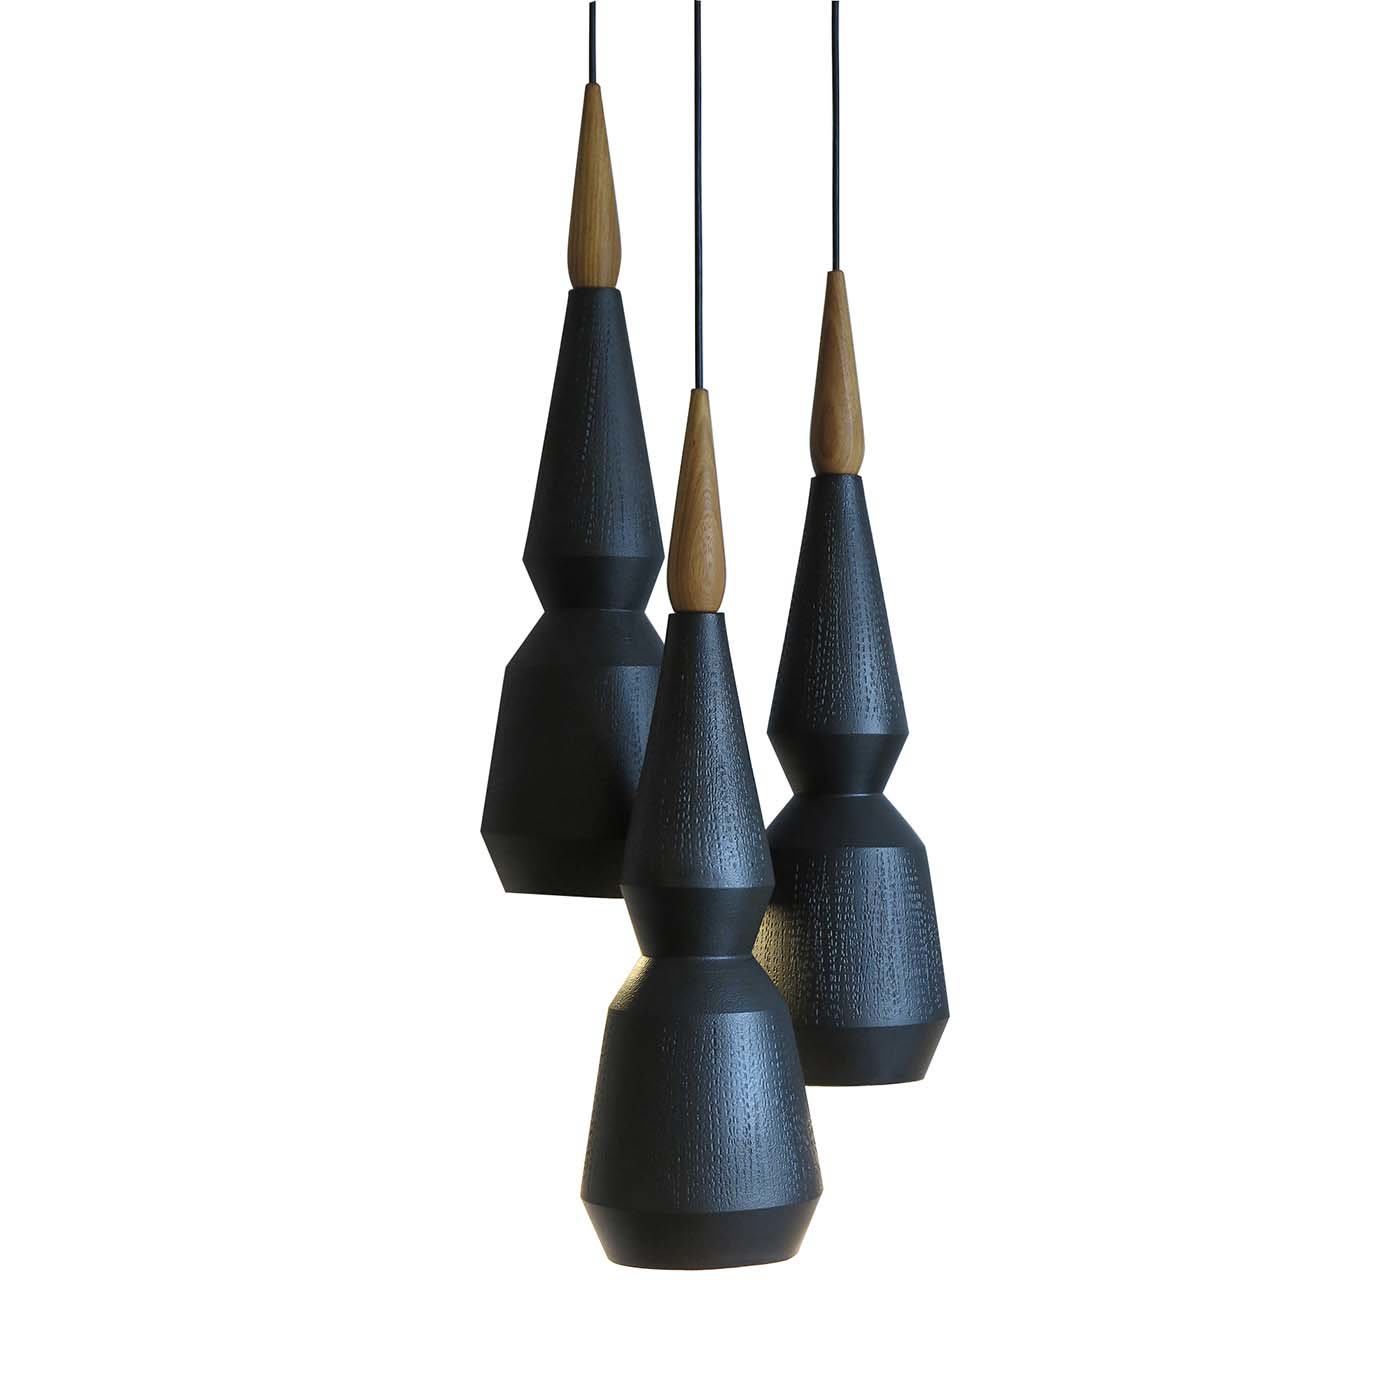 Set of 3 Pendant Lamps in Wood and Ceramics #1 - Capperidicasa